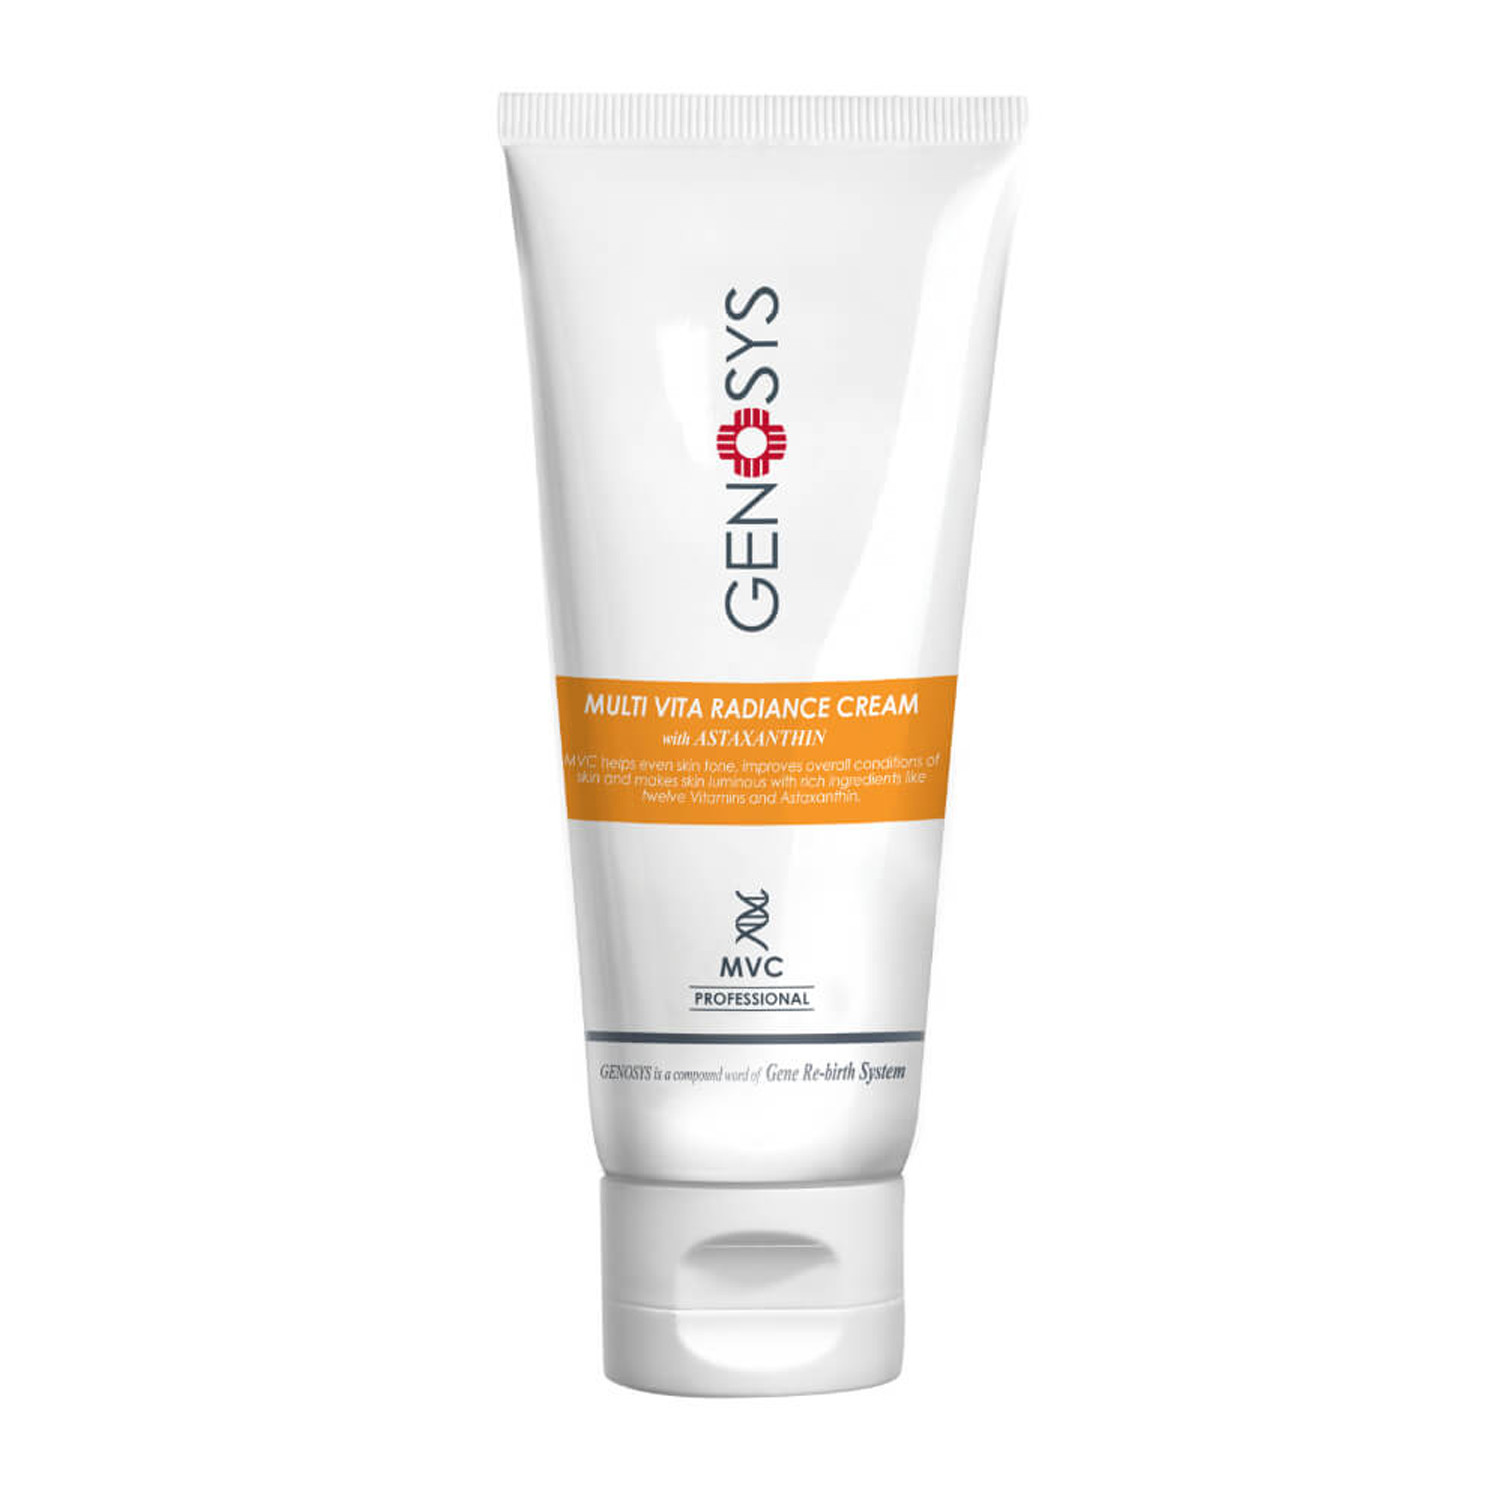 Genosys Multi Vita Radiance Cream - Мультивитаминный крем для сияния кожи